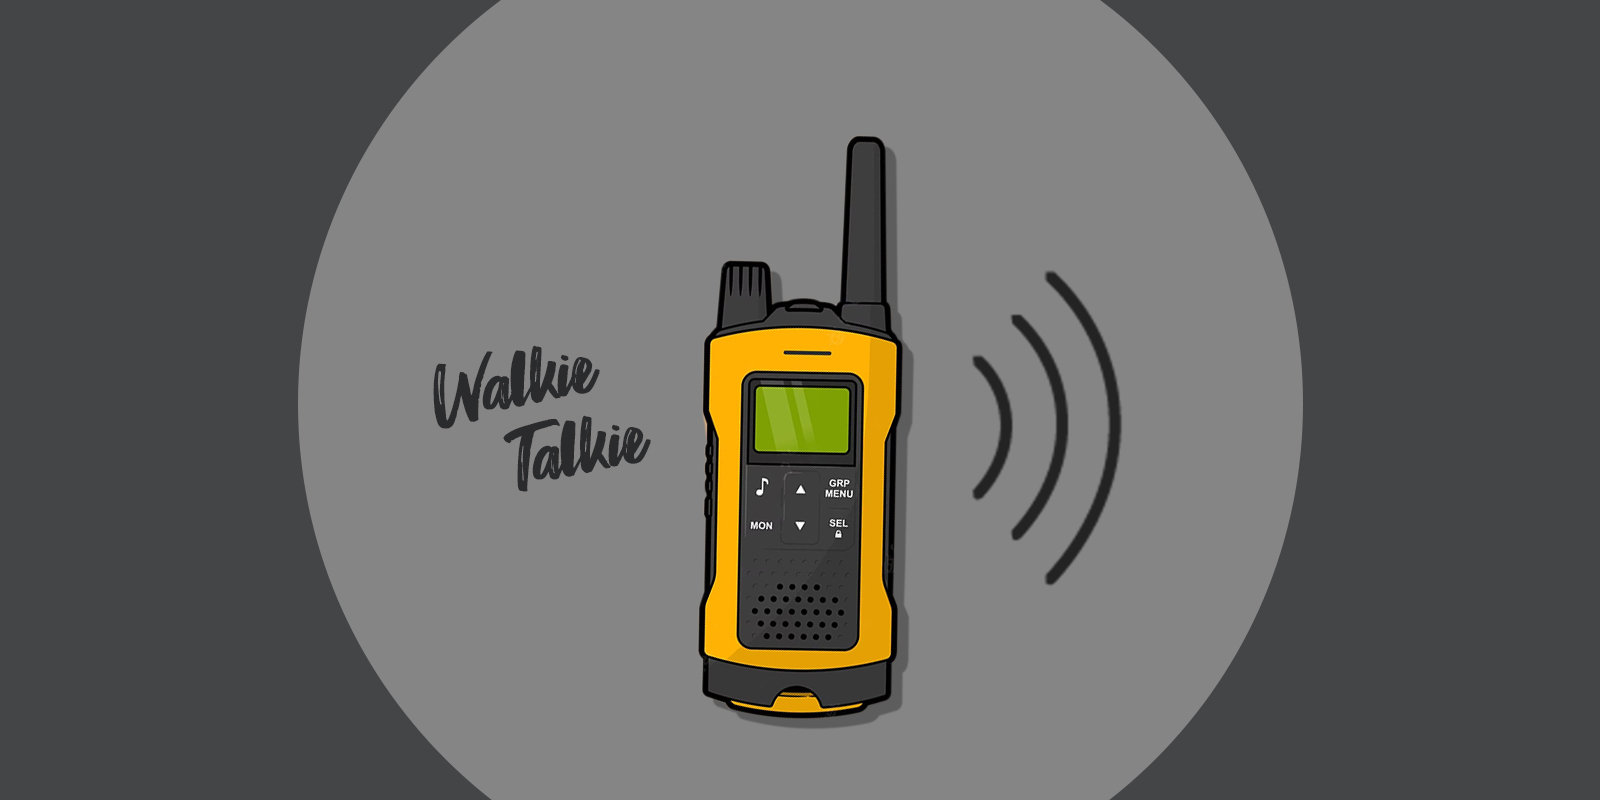 An illustration of a walkie-talkie